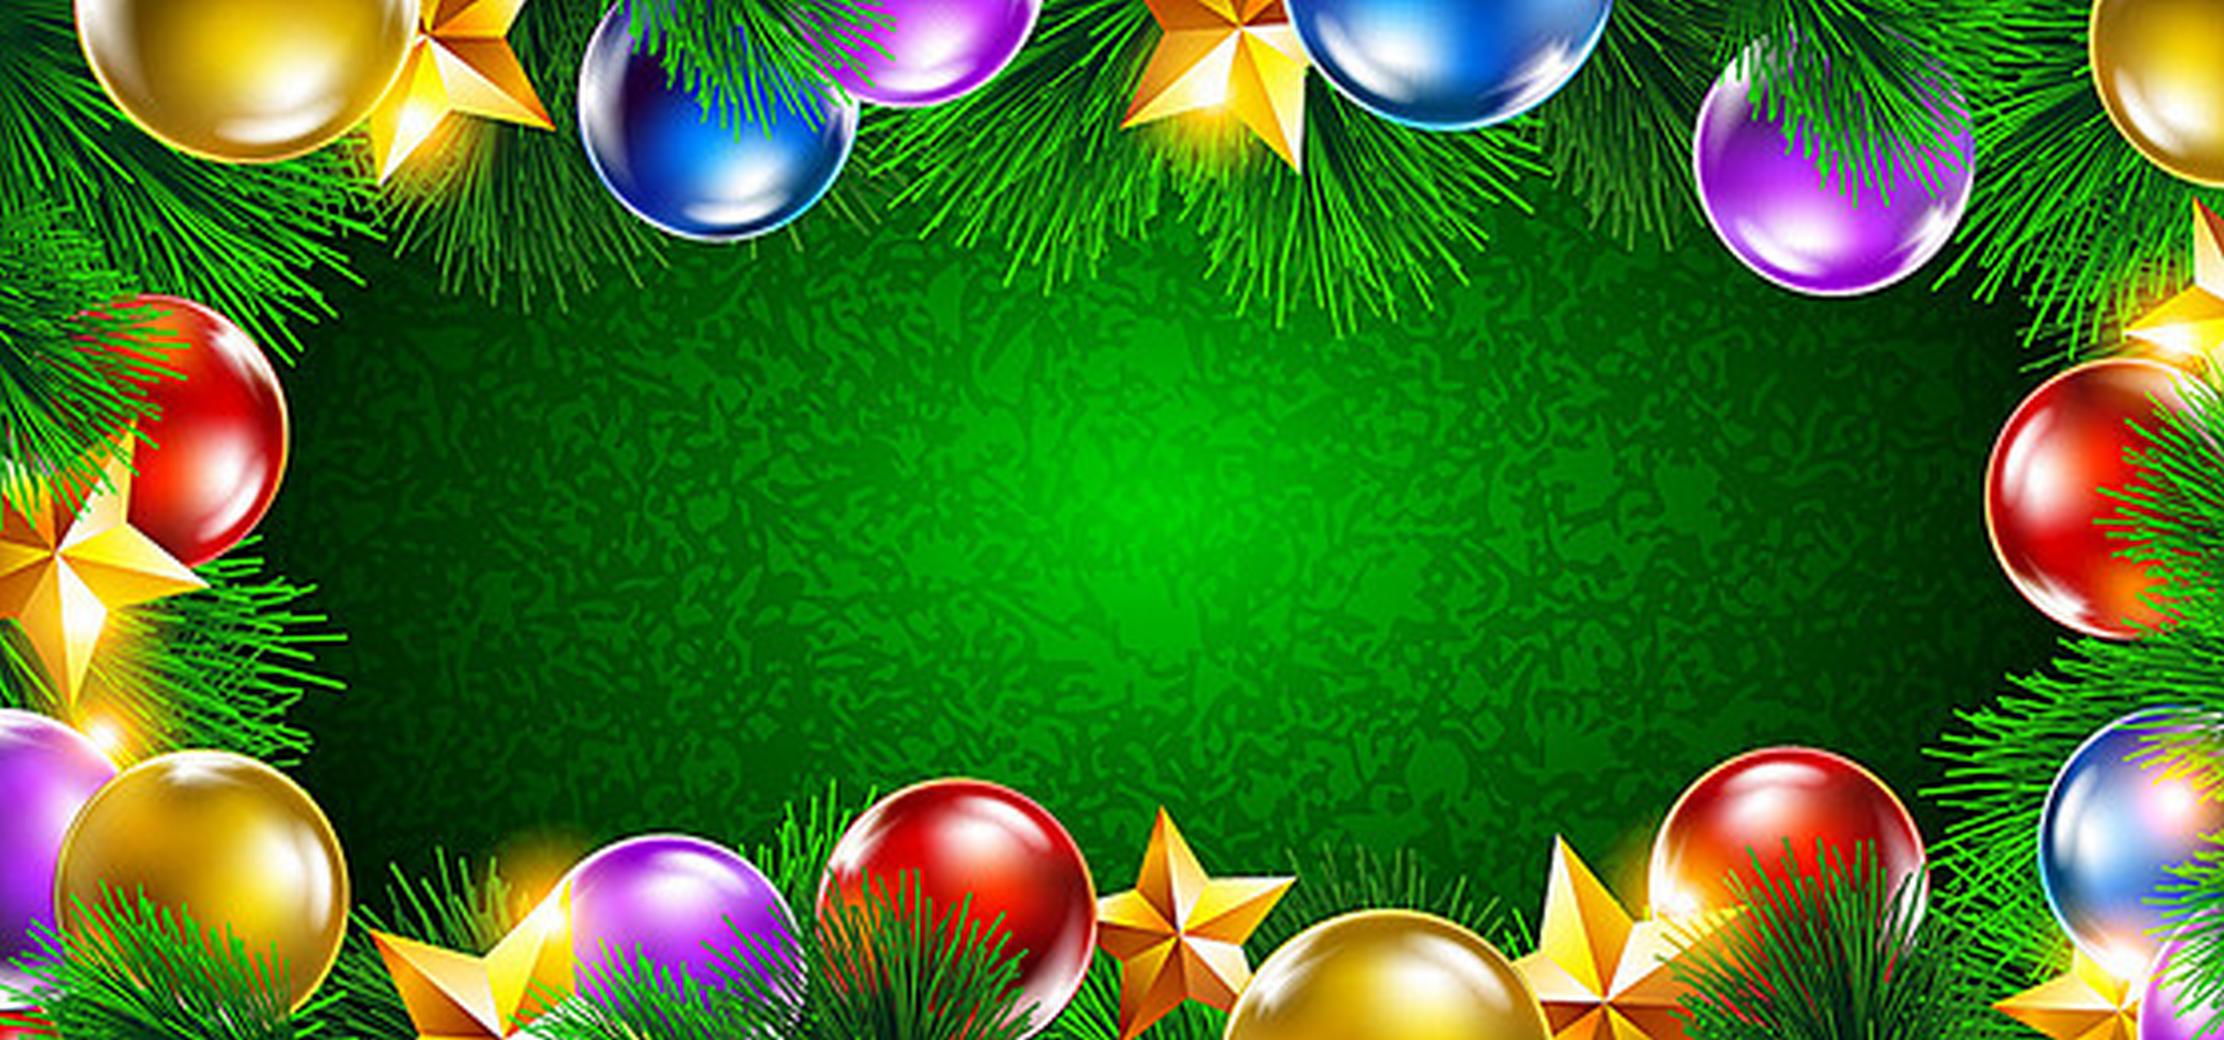 GIFT purchase return policy (Christmas / Hanukkah / Winter Holidays)